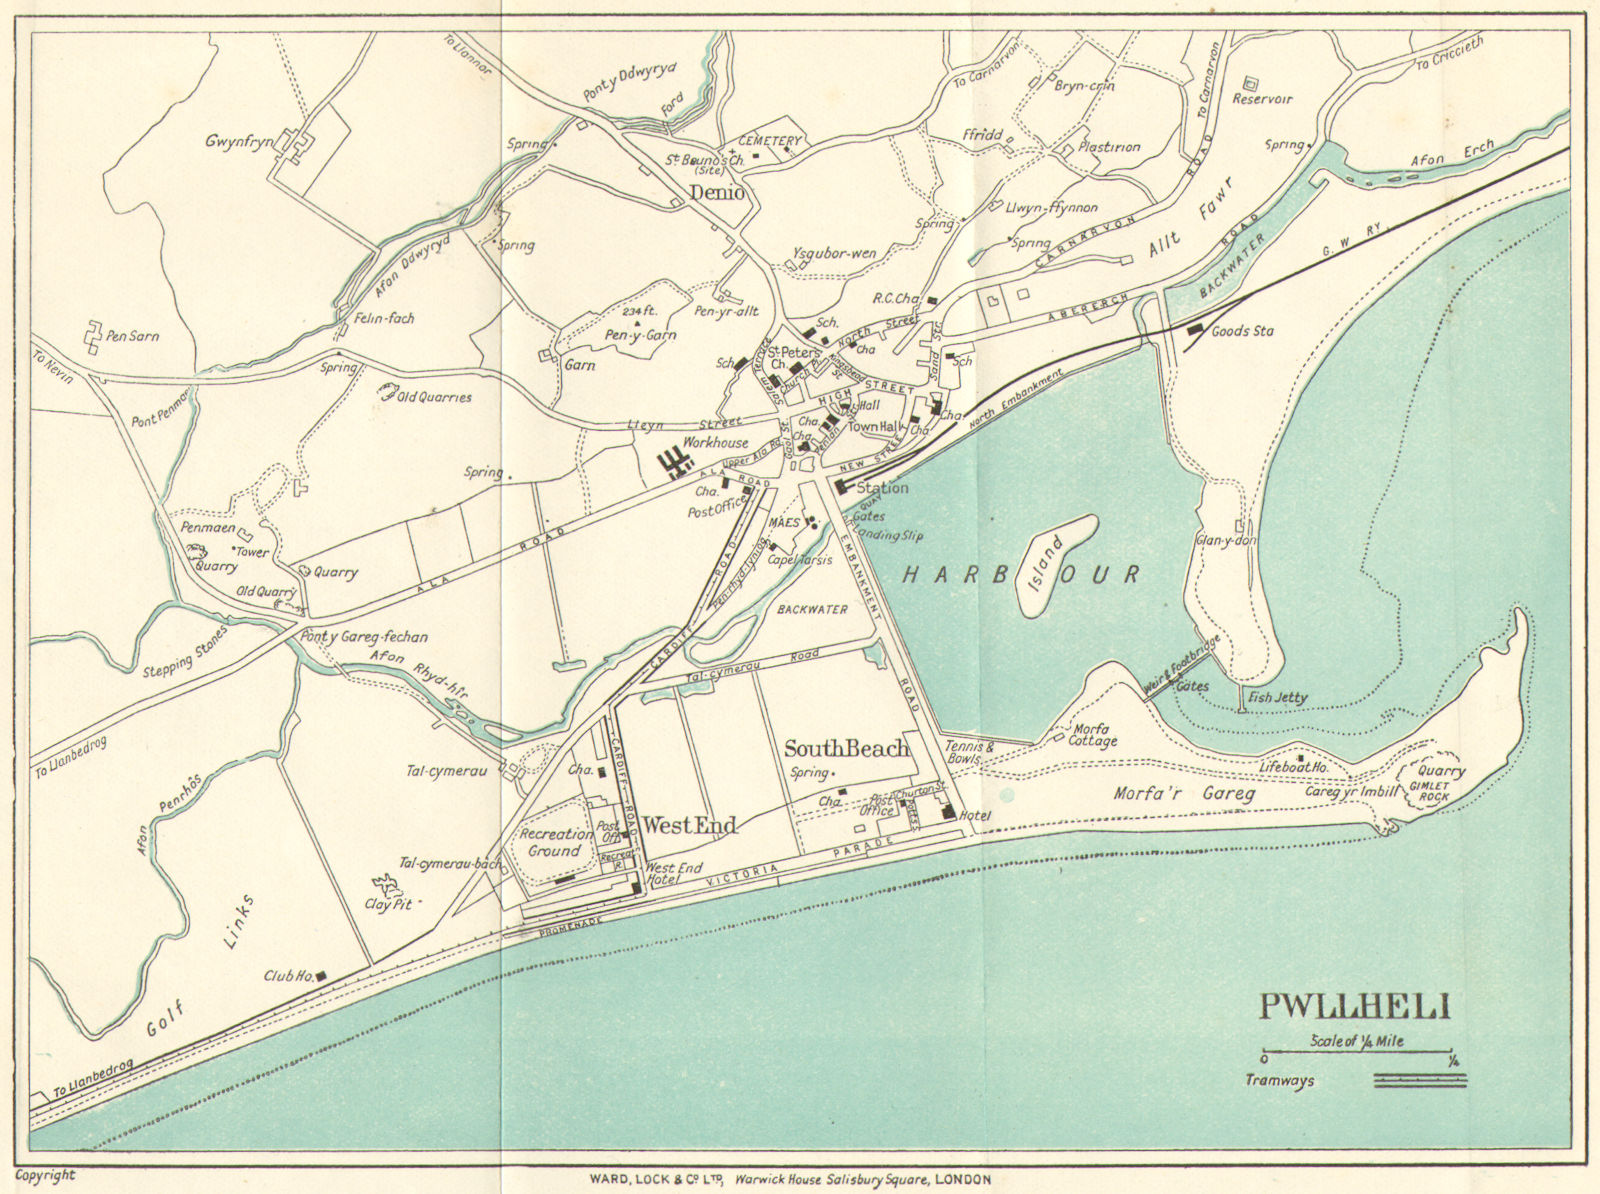 PWLLHELI vintage town/city plan. Wales. WARD LOCK c1928 old vintage map chart